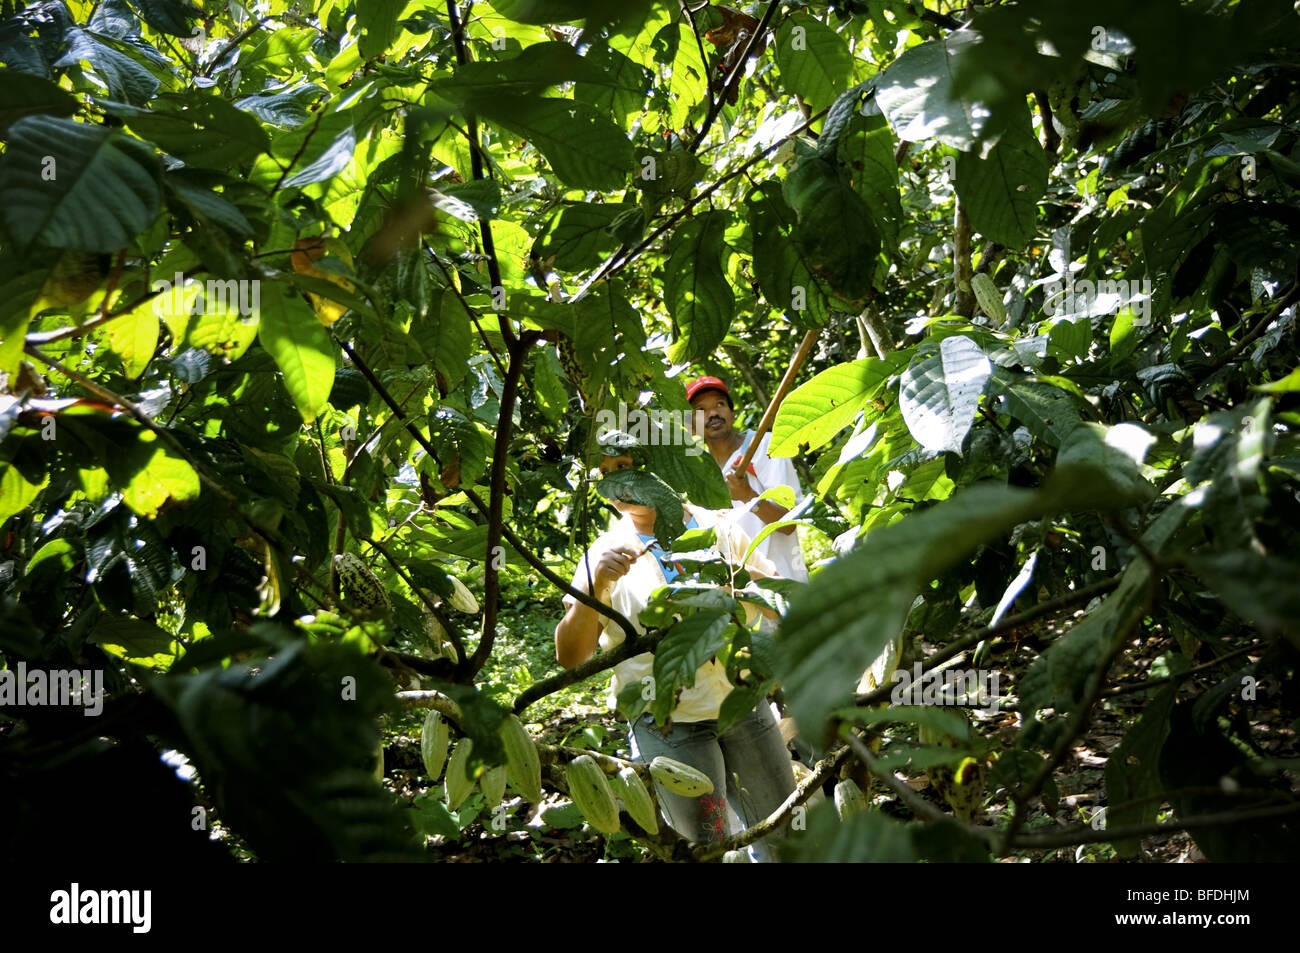 workers harvest cacao (Theobroma cacao) among lush, green trees and vegetation in Choroni, Venezuela. Stock Photo